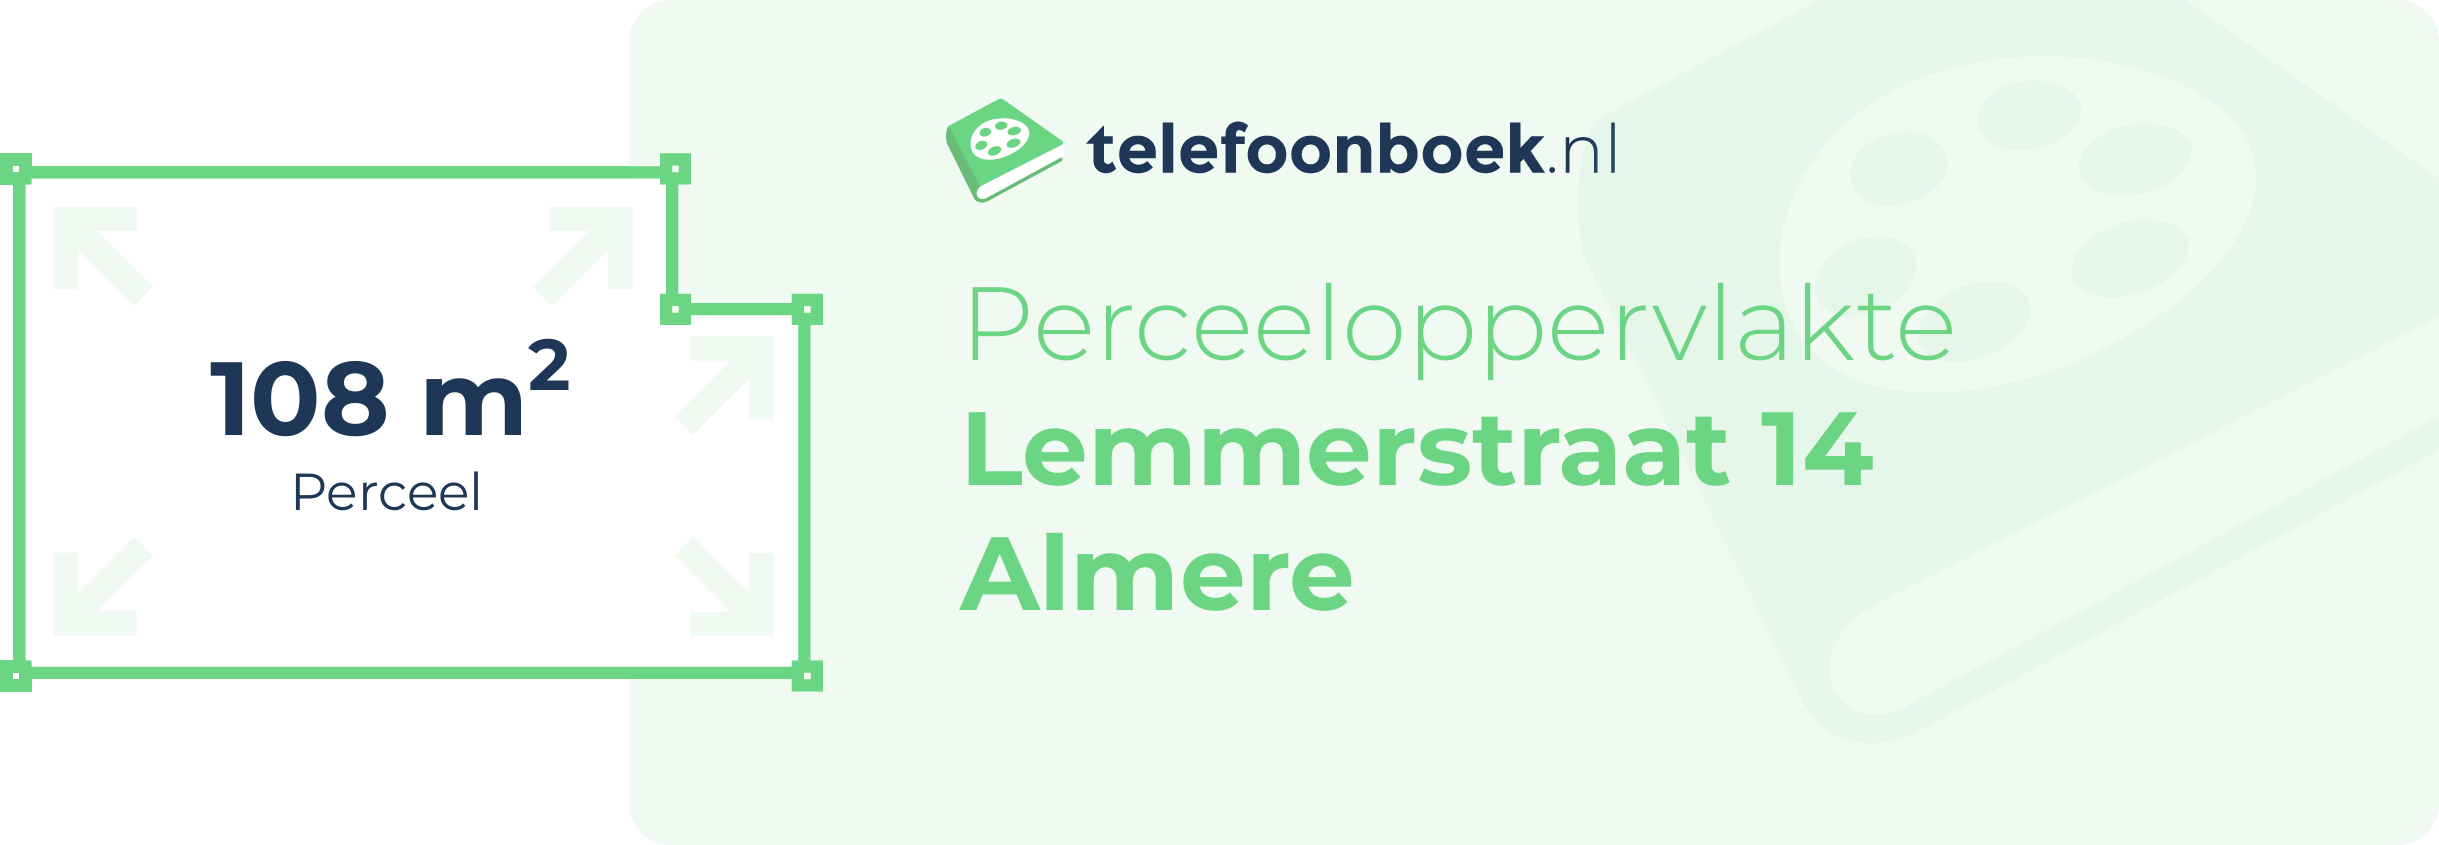 Perceeloppervlakte Lemmerstraat 14 Almere